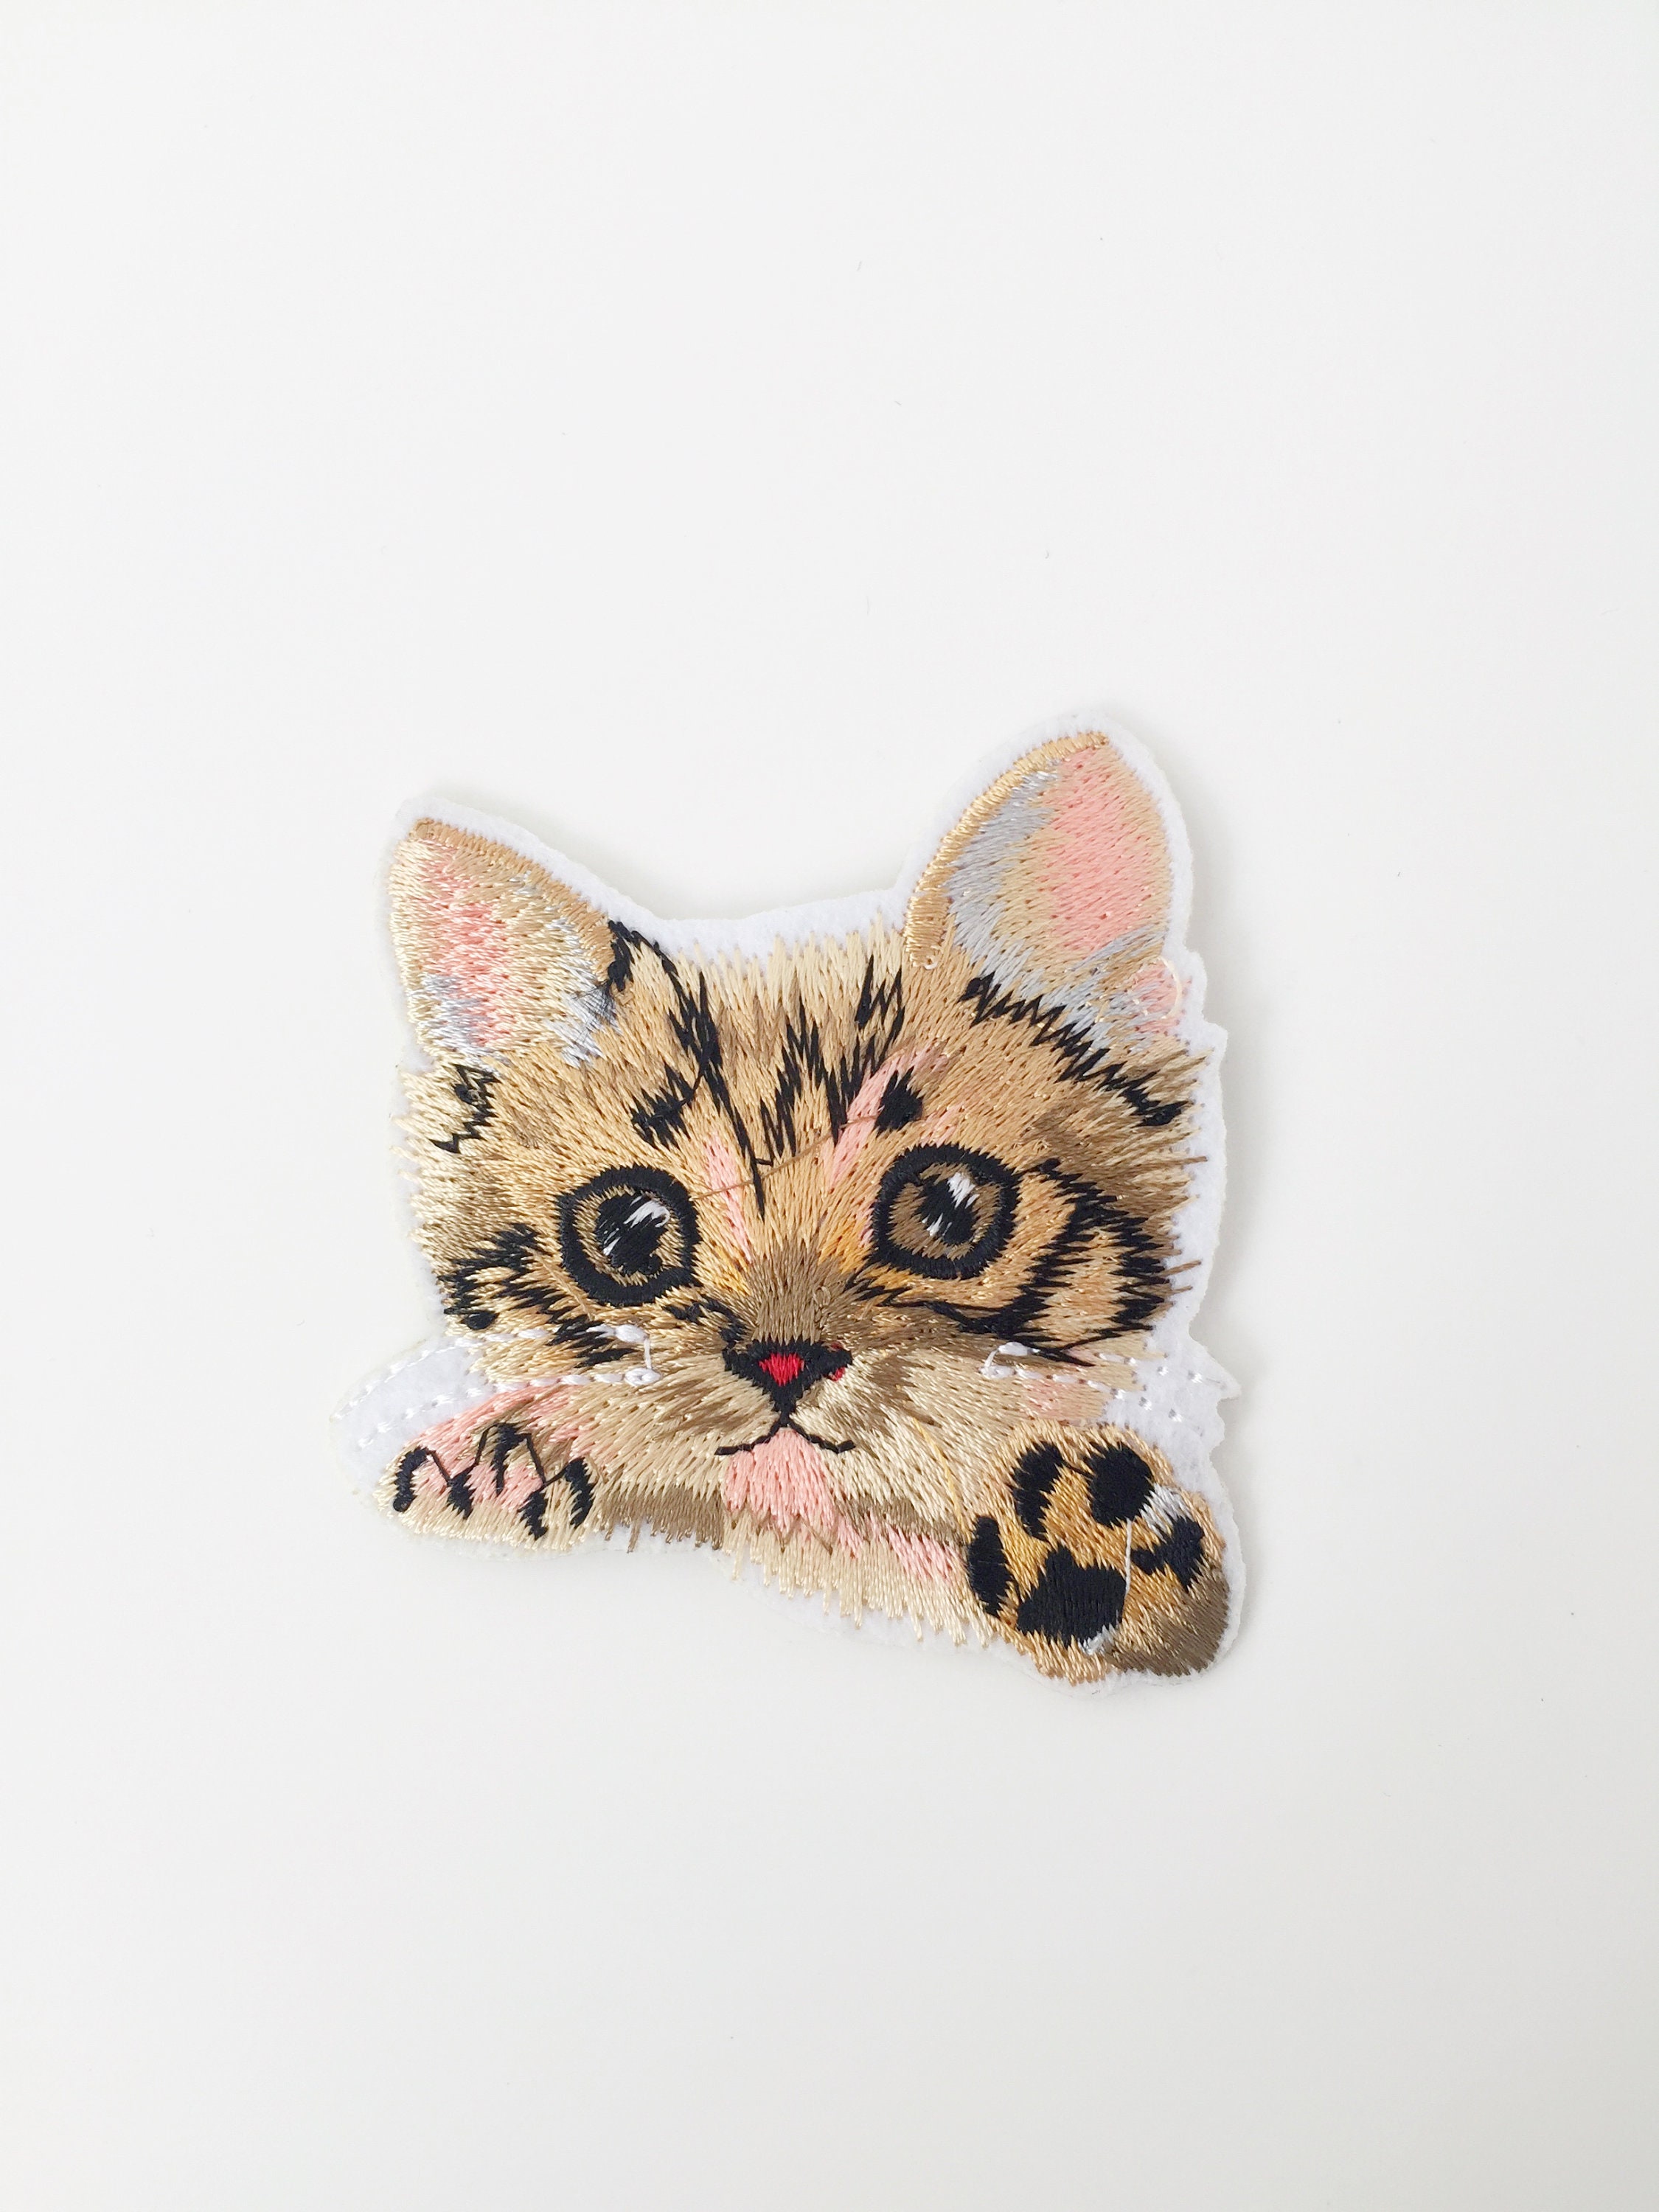 AHYONNIEX Cute Embroidery Cat Patch